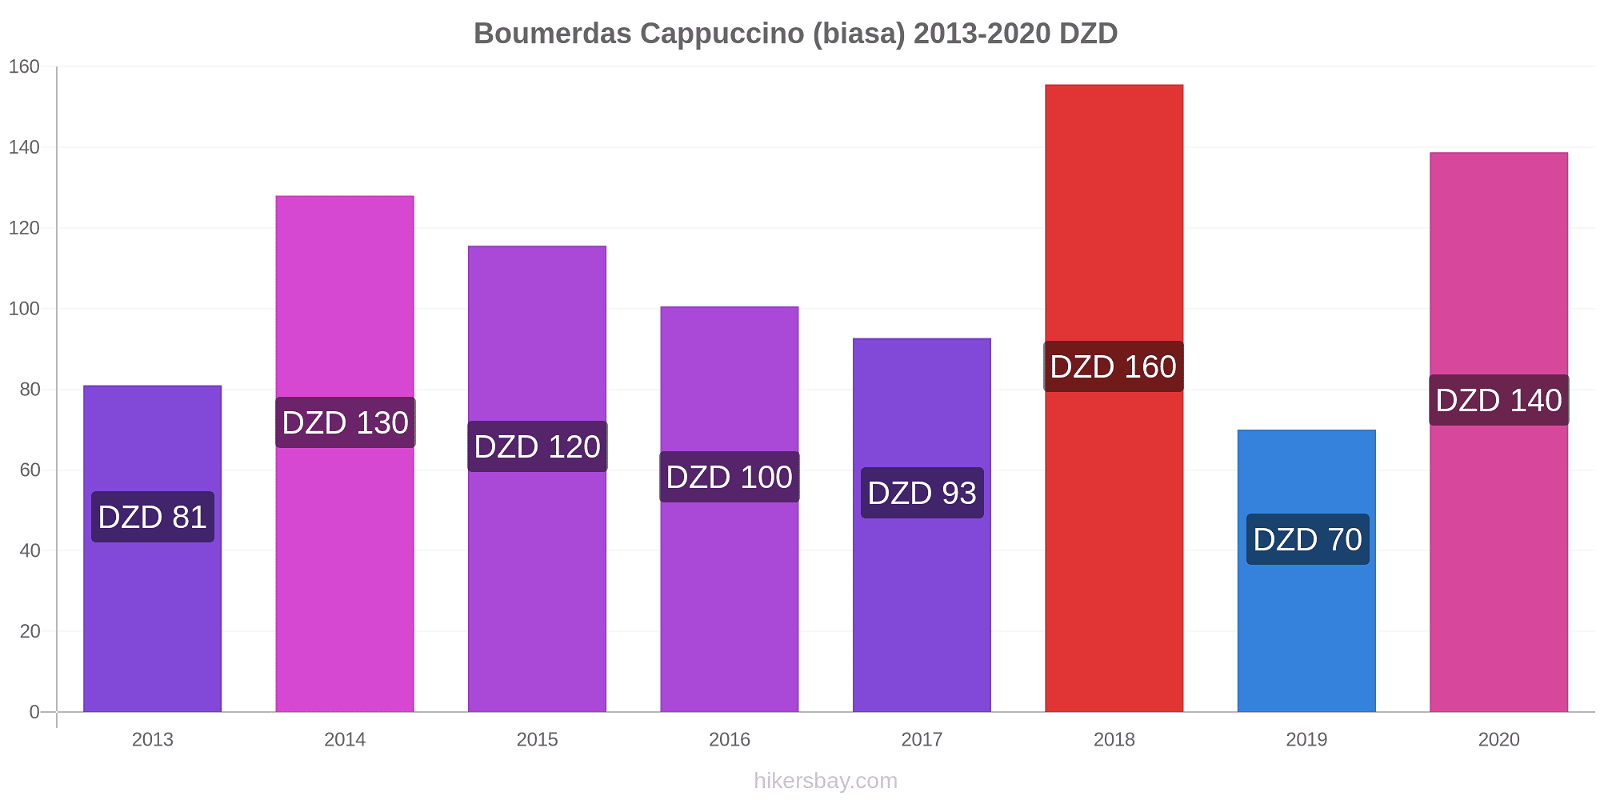 Boumerdas perubahan harga Cappuccino (biasa) hikersbay.com